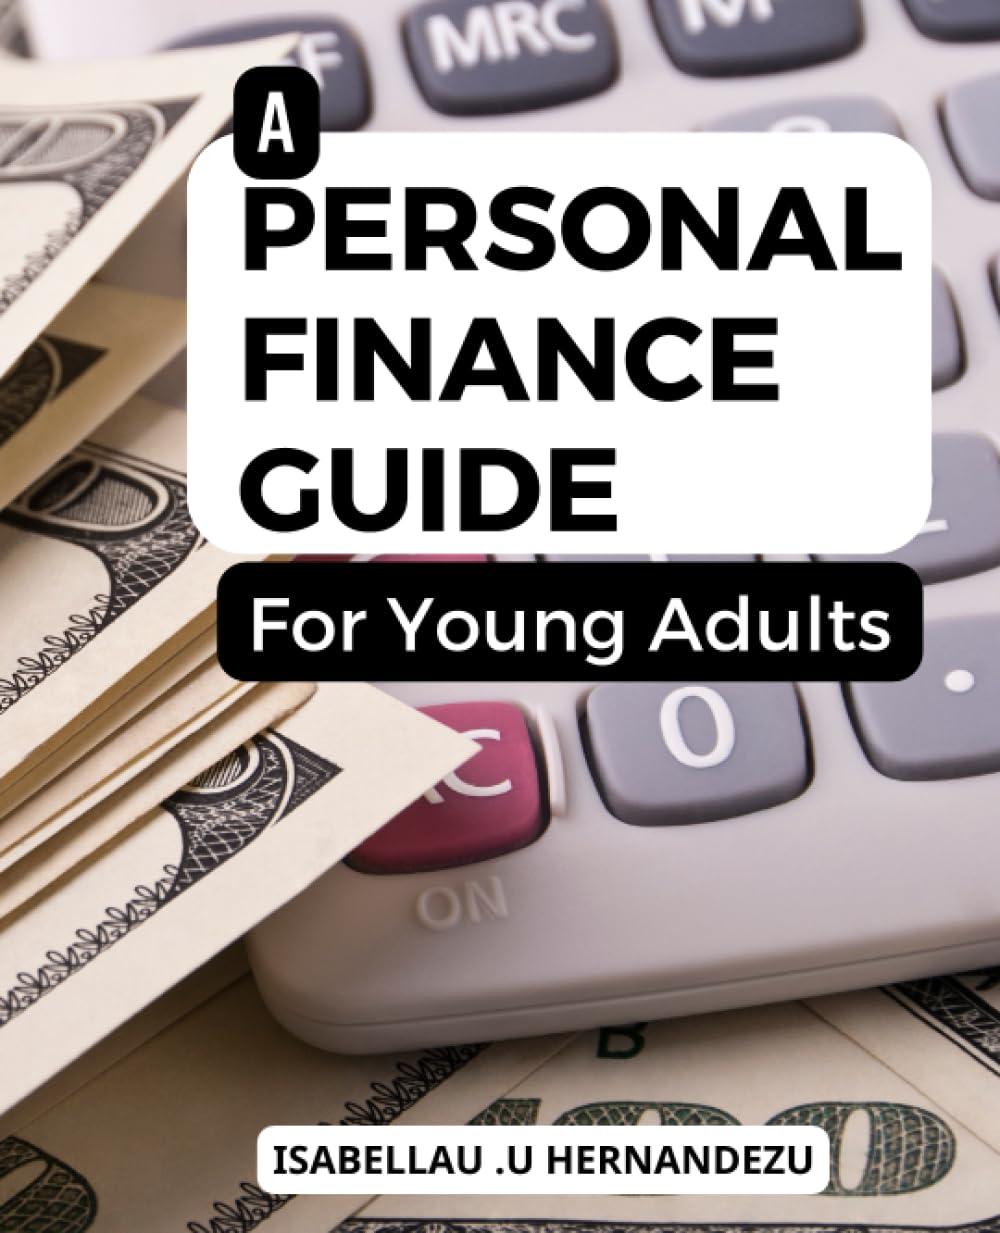 a personal finance guide for young adults 1st edition isabellau .u hernandezu b0c7f767qg, 979-8397580052